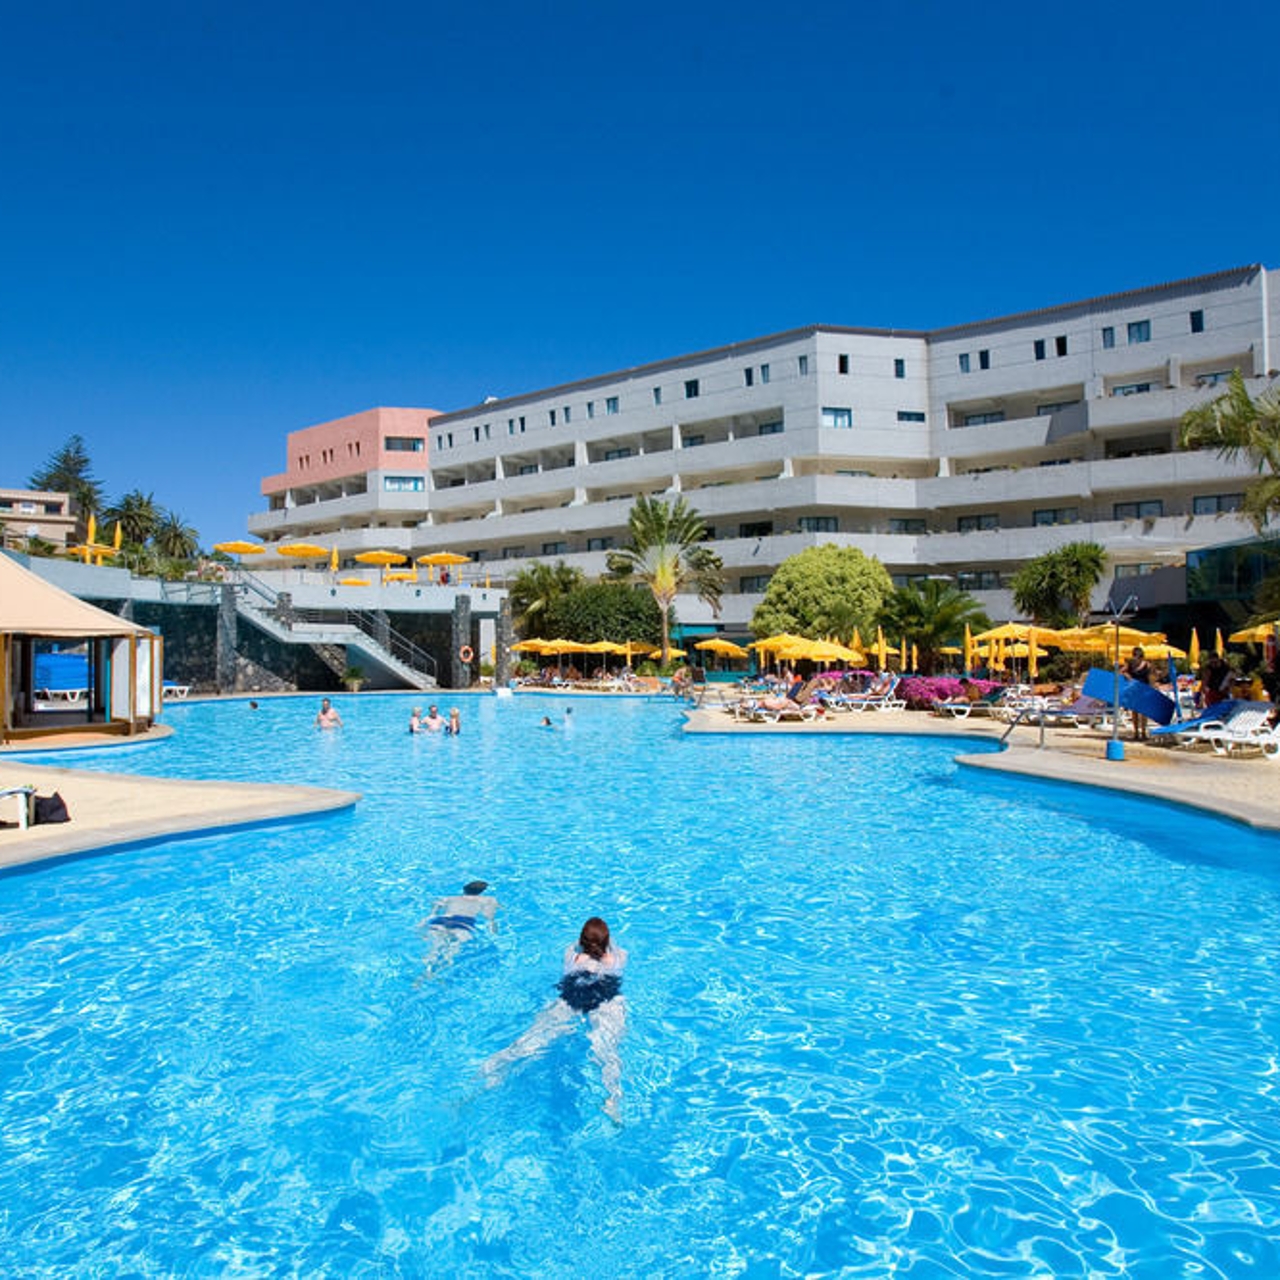 Hotel Turquesa Playa - 4 HRS star hotel in Puerto de la Cruz (Canary Islands )